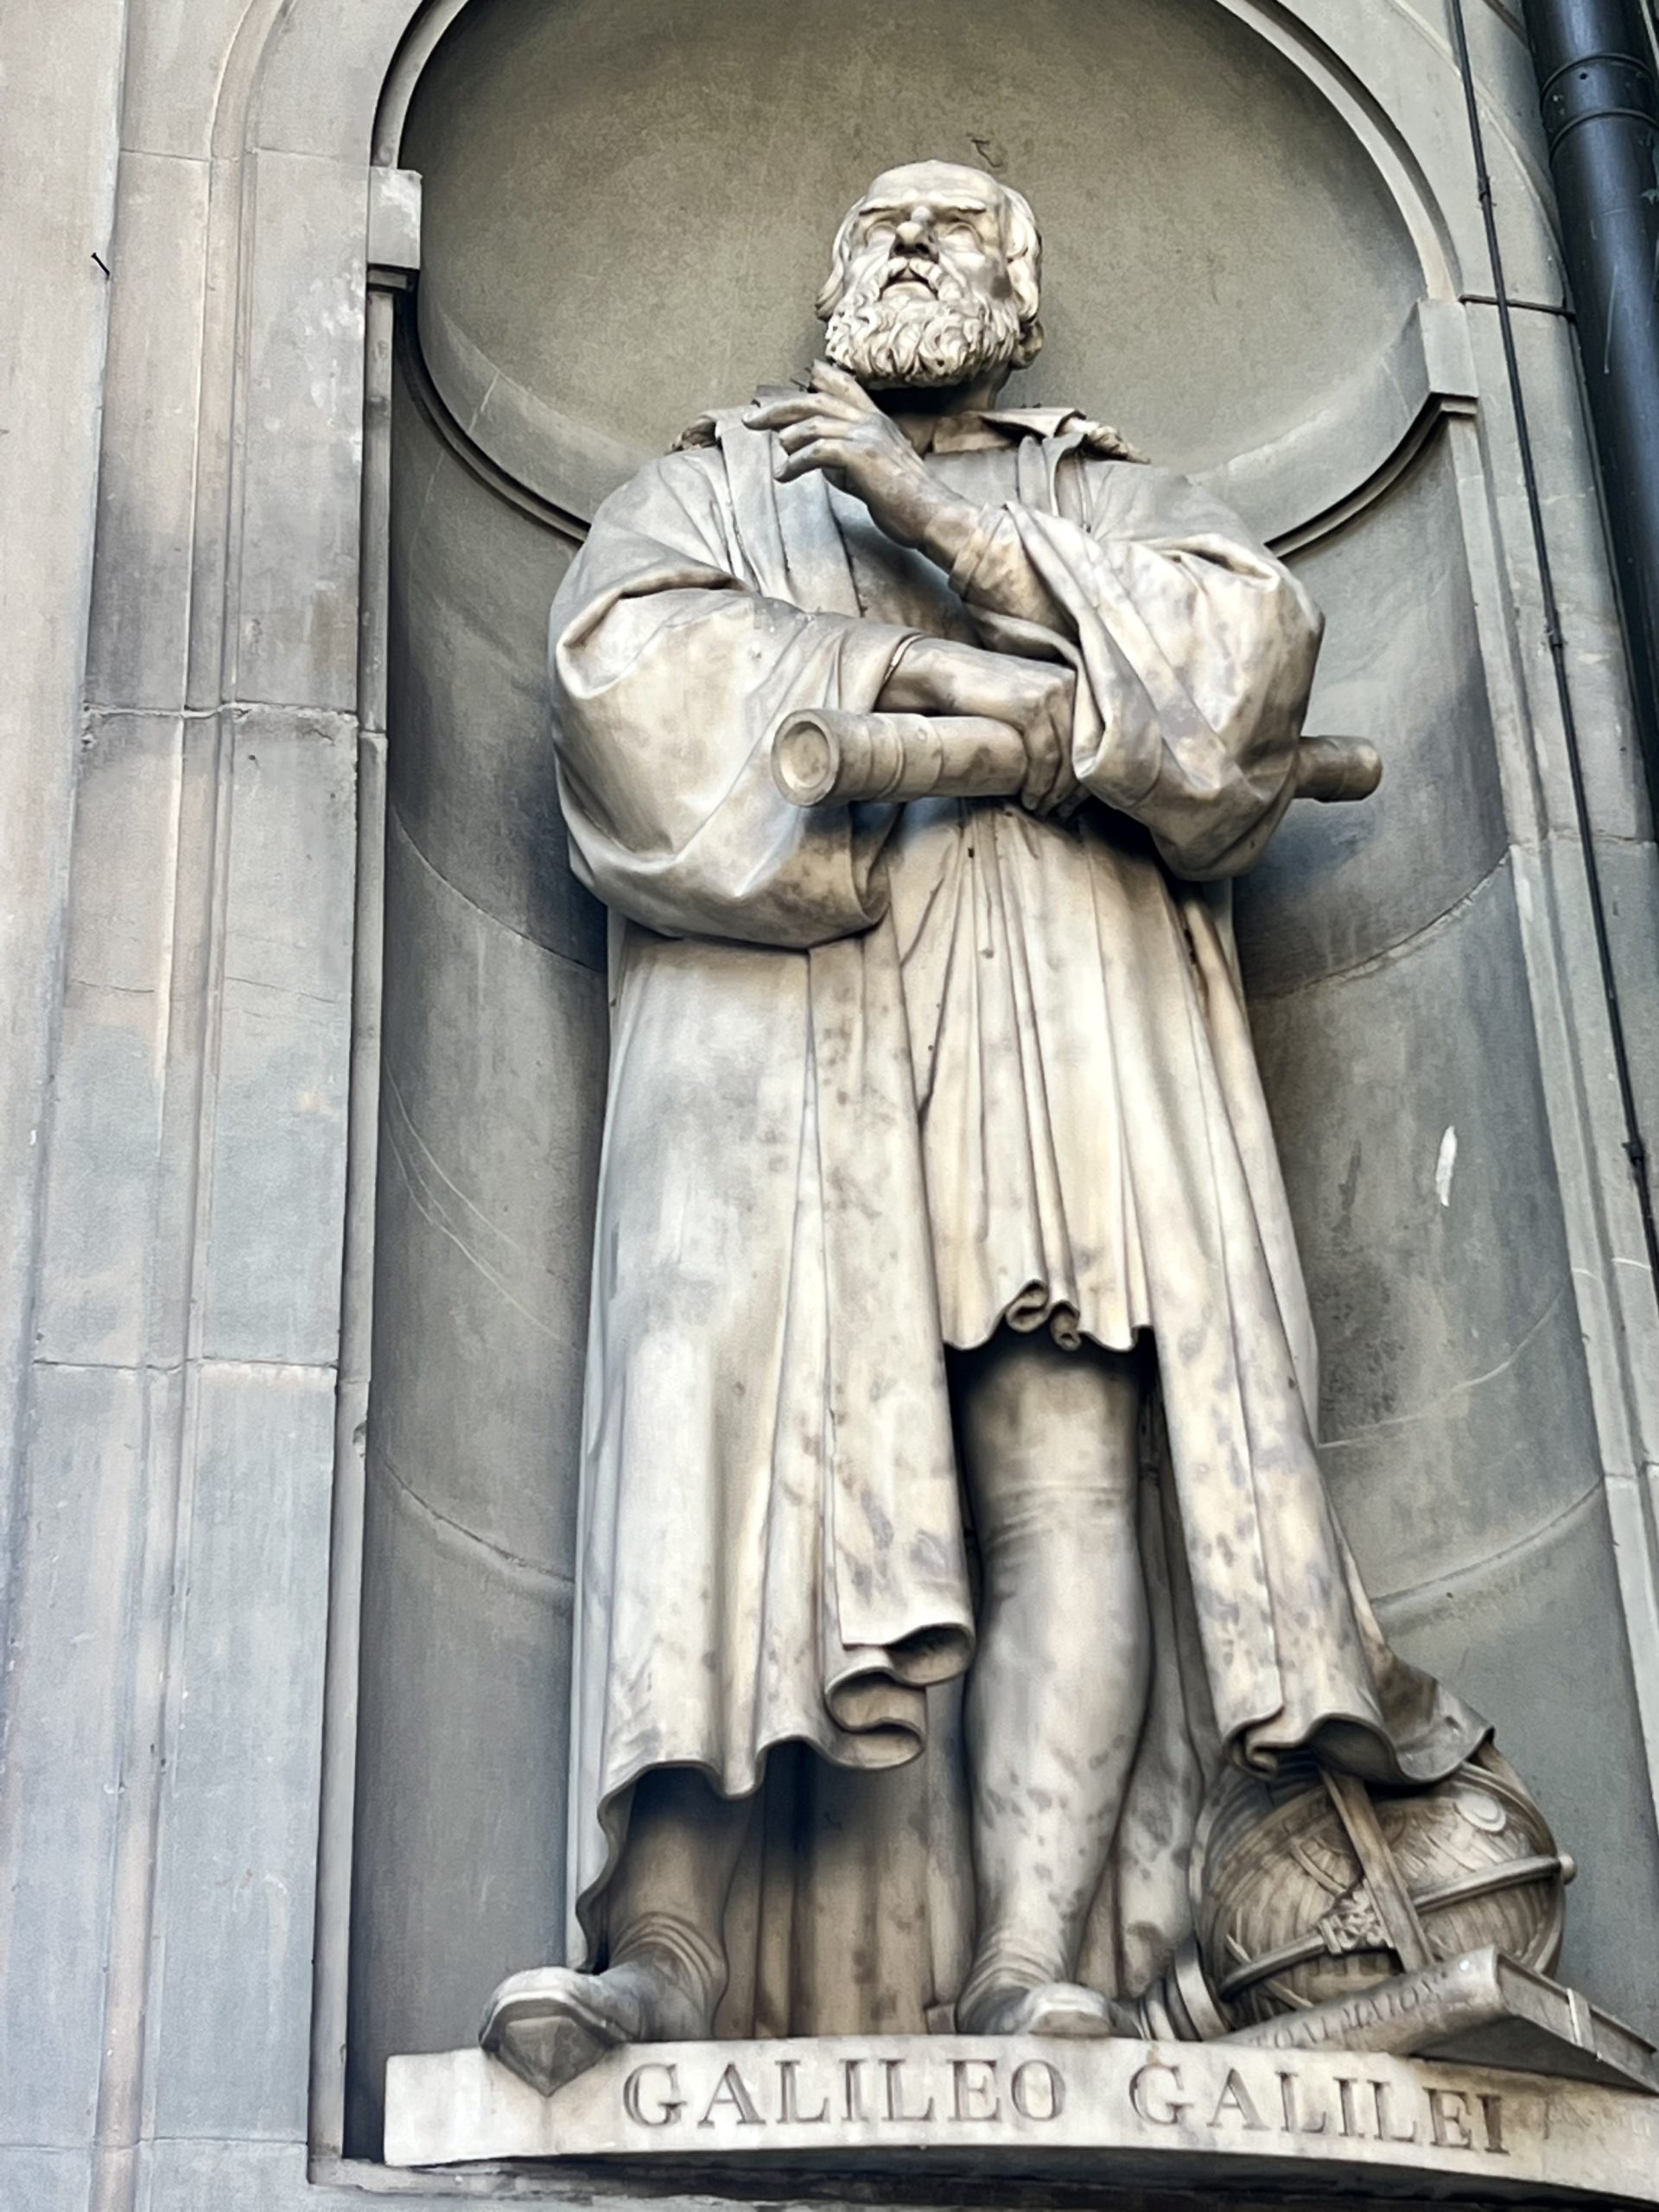 Galileo statue on the facade of the Uffizi